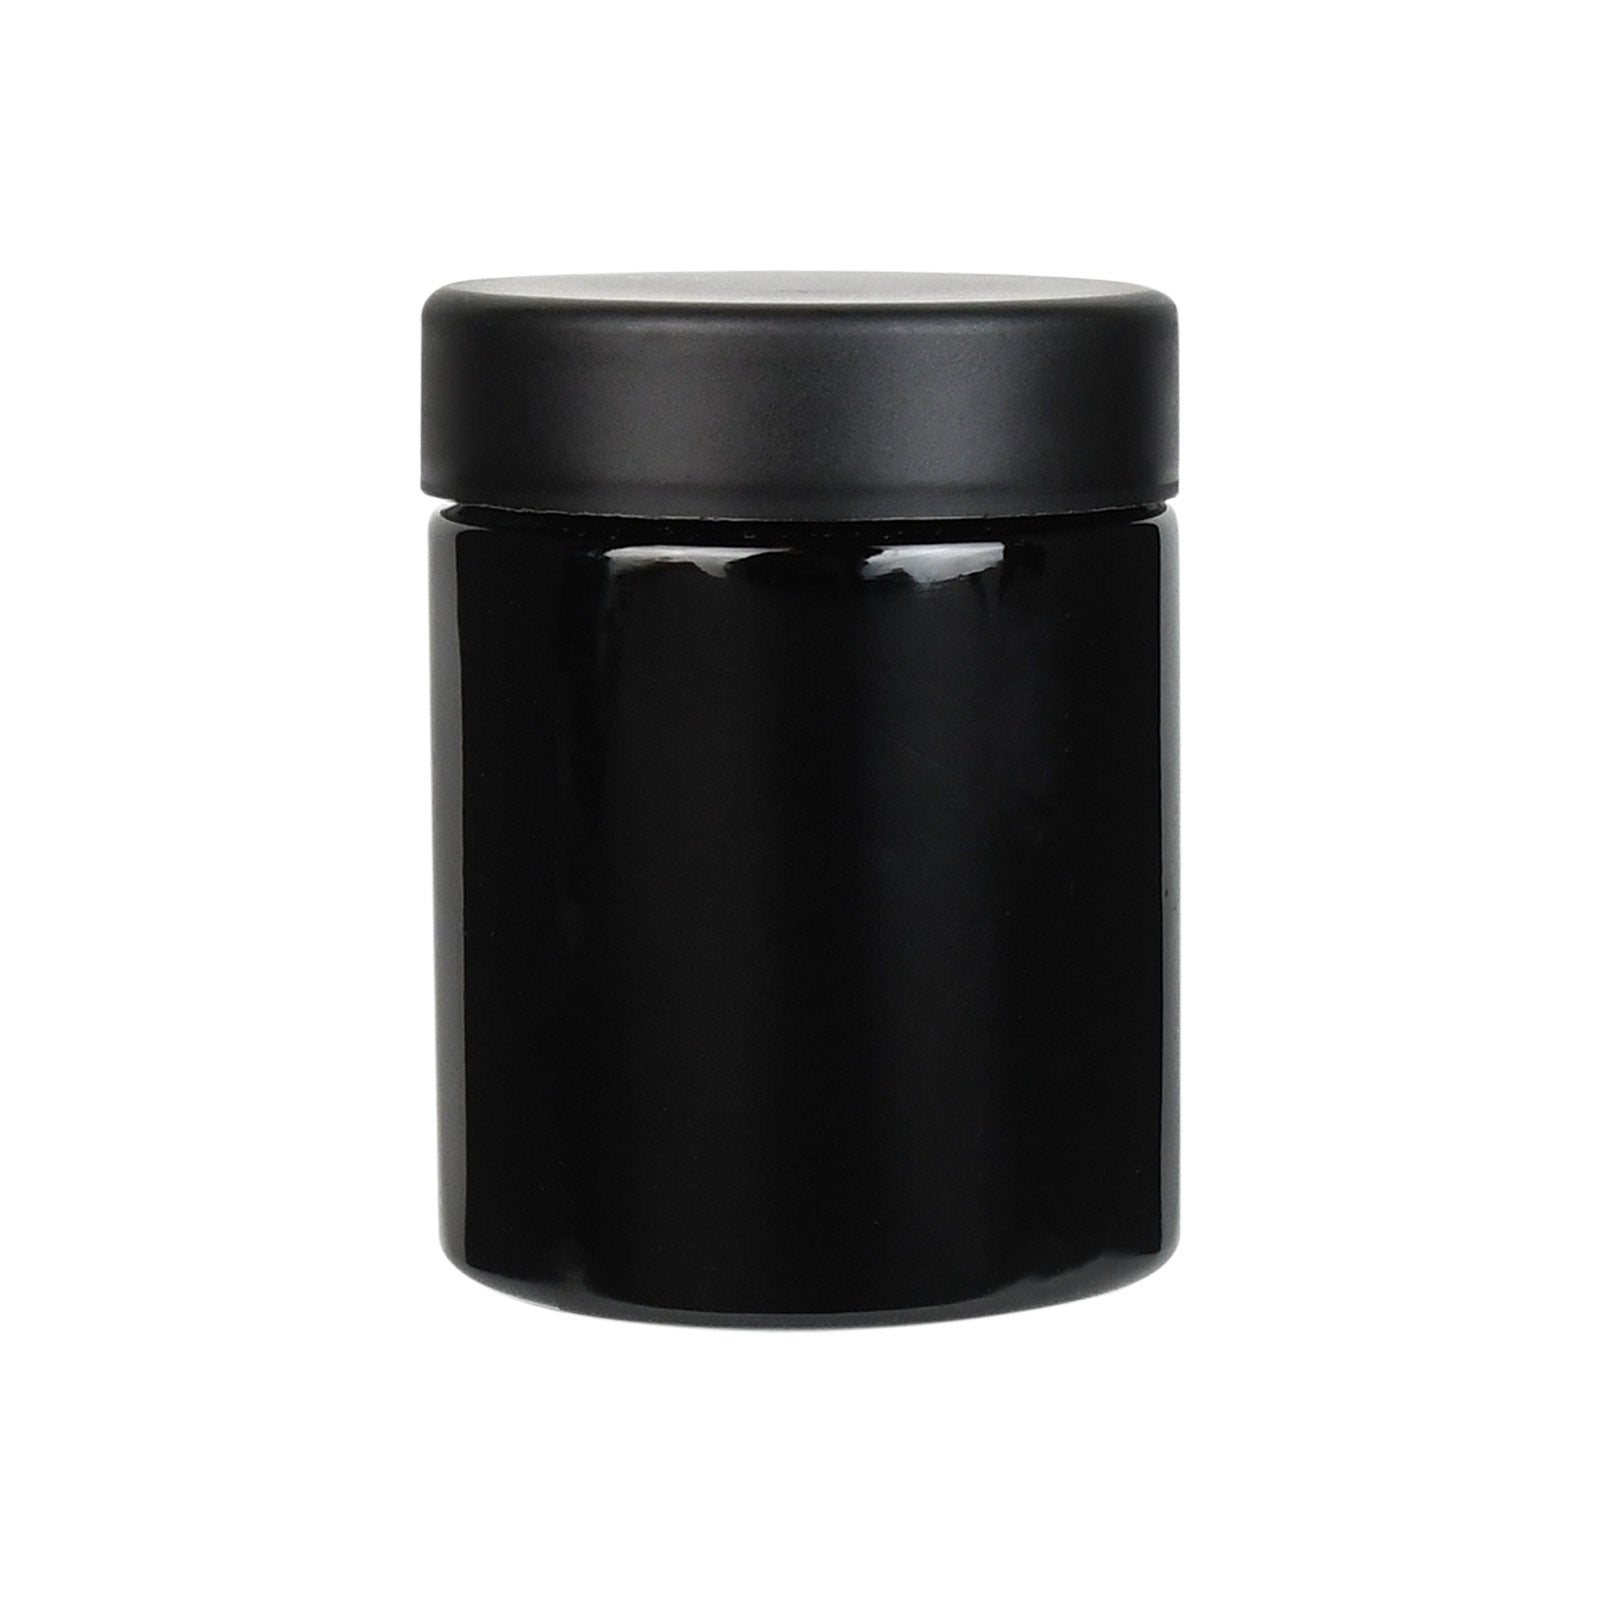 5oz Premium Glass Jars w/ Child Resistant Lids - Black Lid (120 Qty)